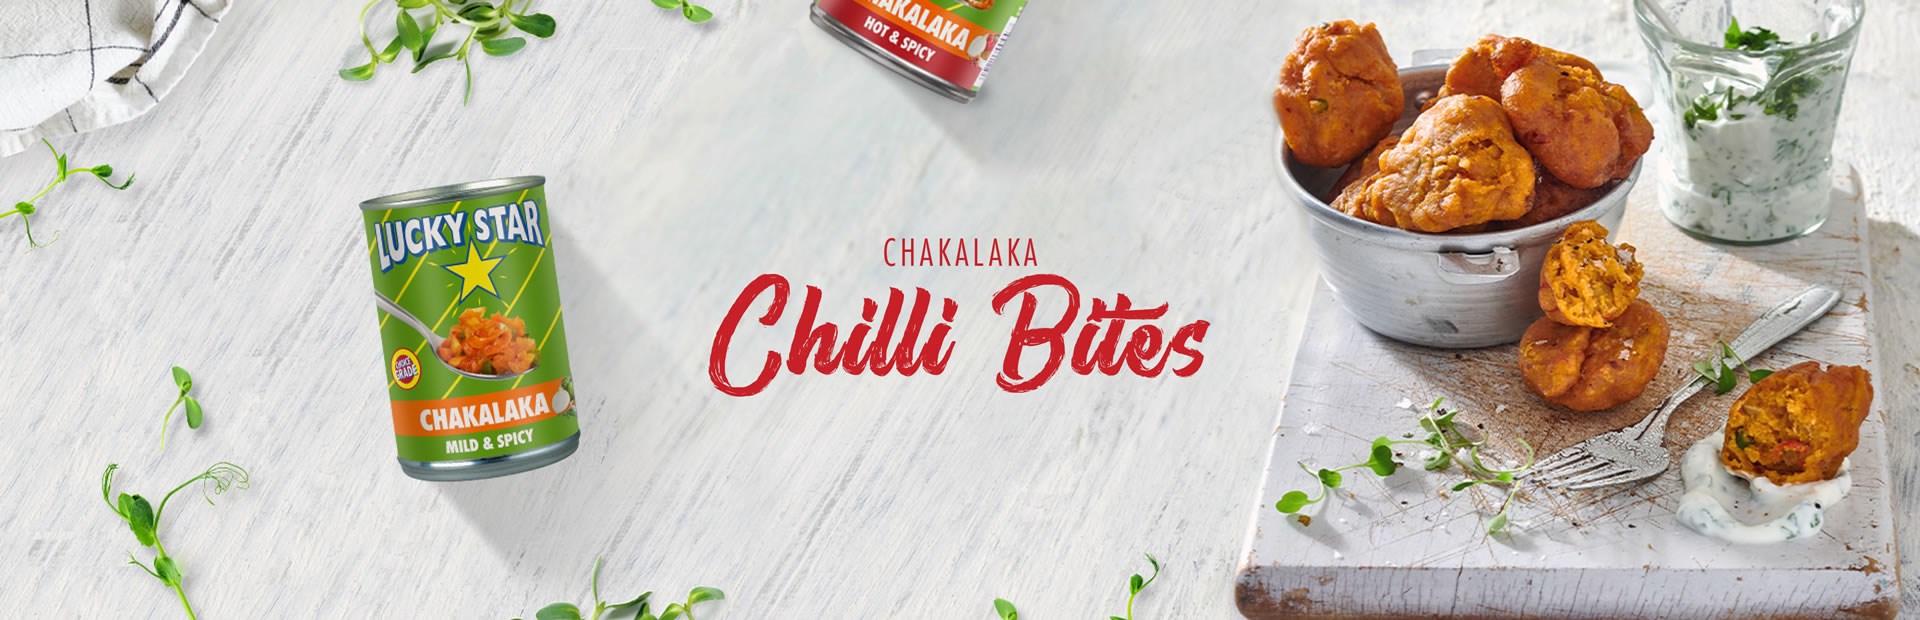 CHAKALAKA Chilli Bites